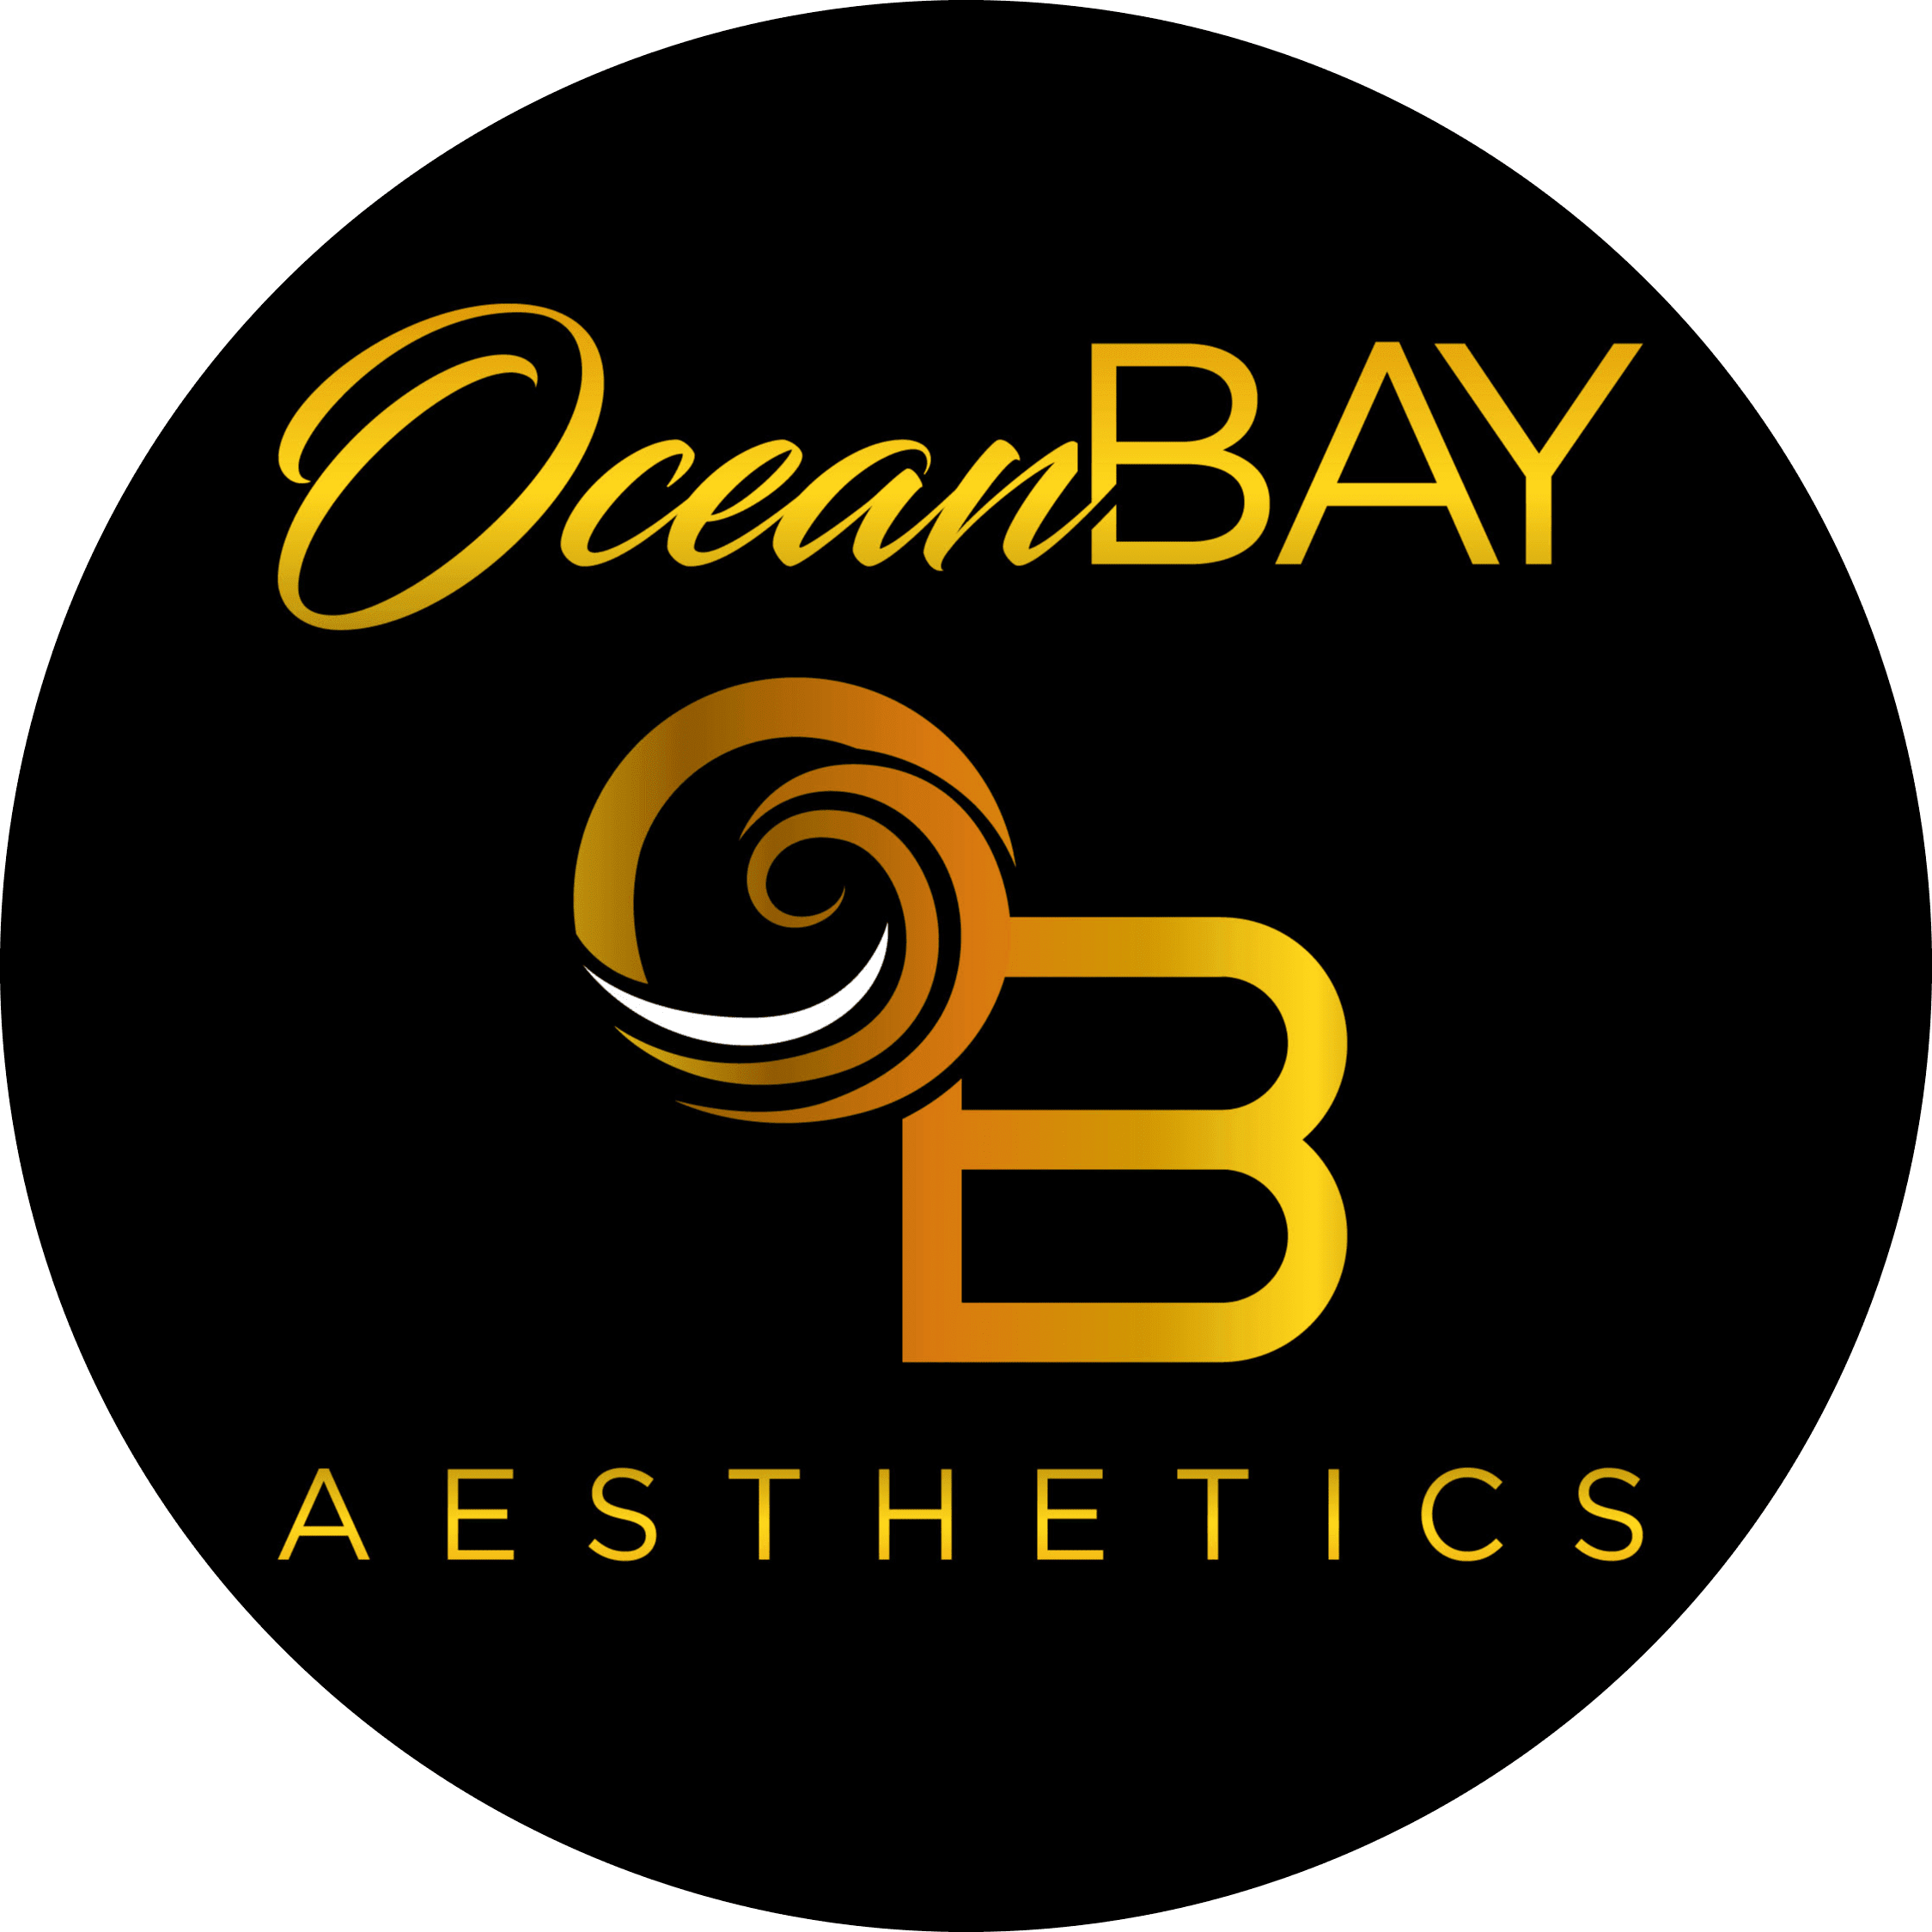 Ocean Bay Aesthetics